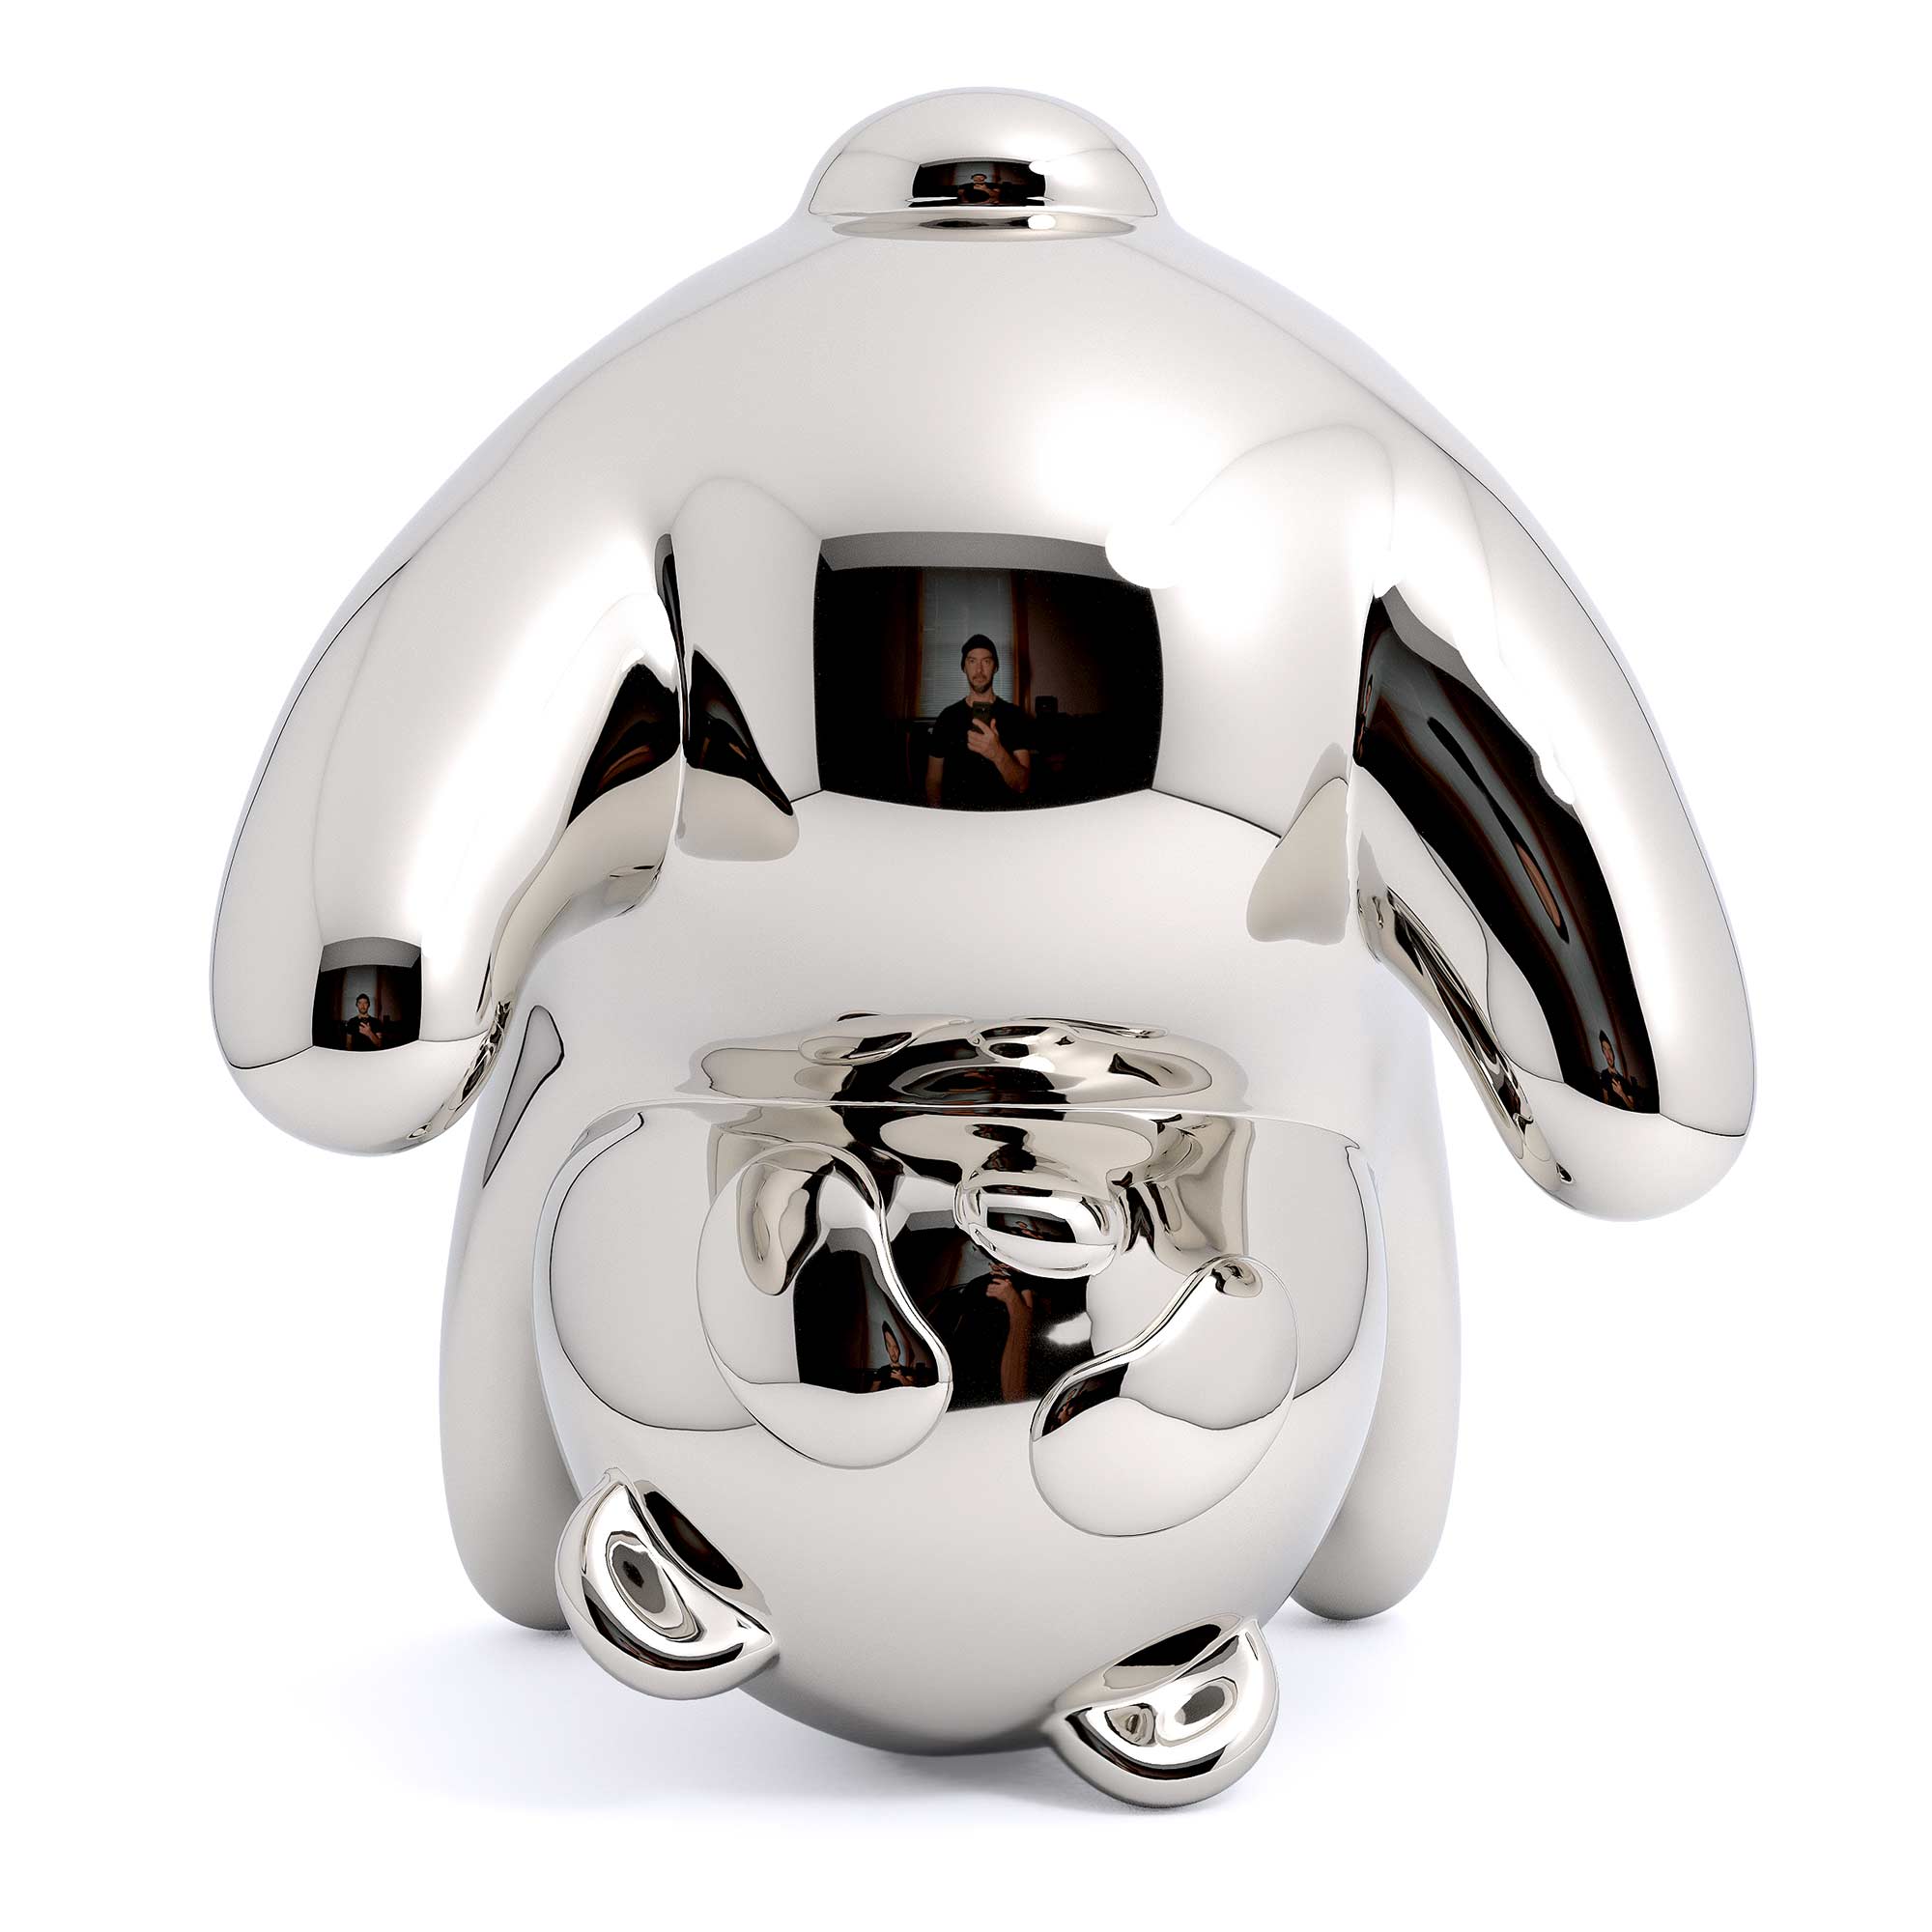 Panda-monium, Mirror Polished Stainless Steel Sculpture, by artist Ferdi B Dick, front view